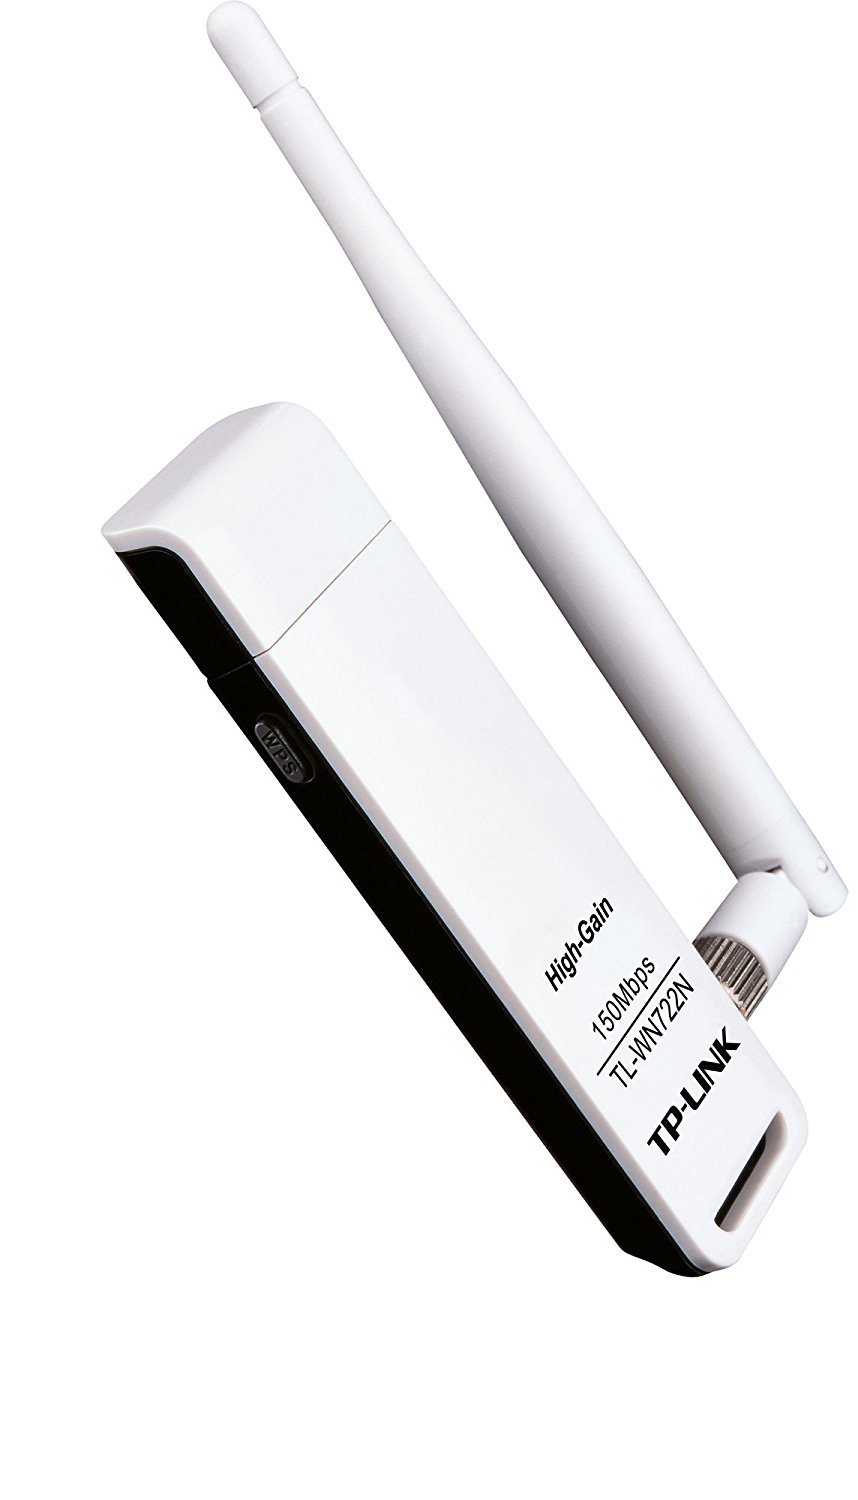 TP-Link N150 Wireless High Gain USB Adapter (TL-WN722N)